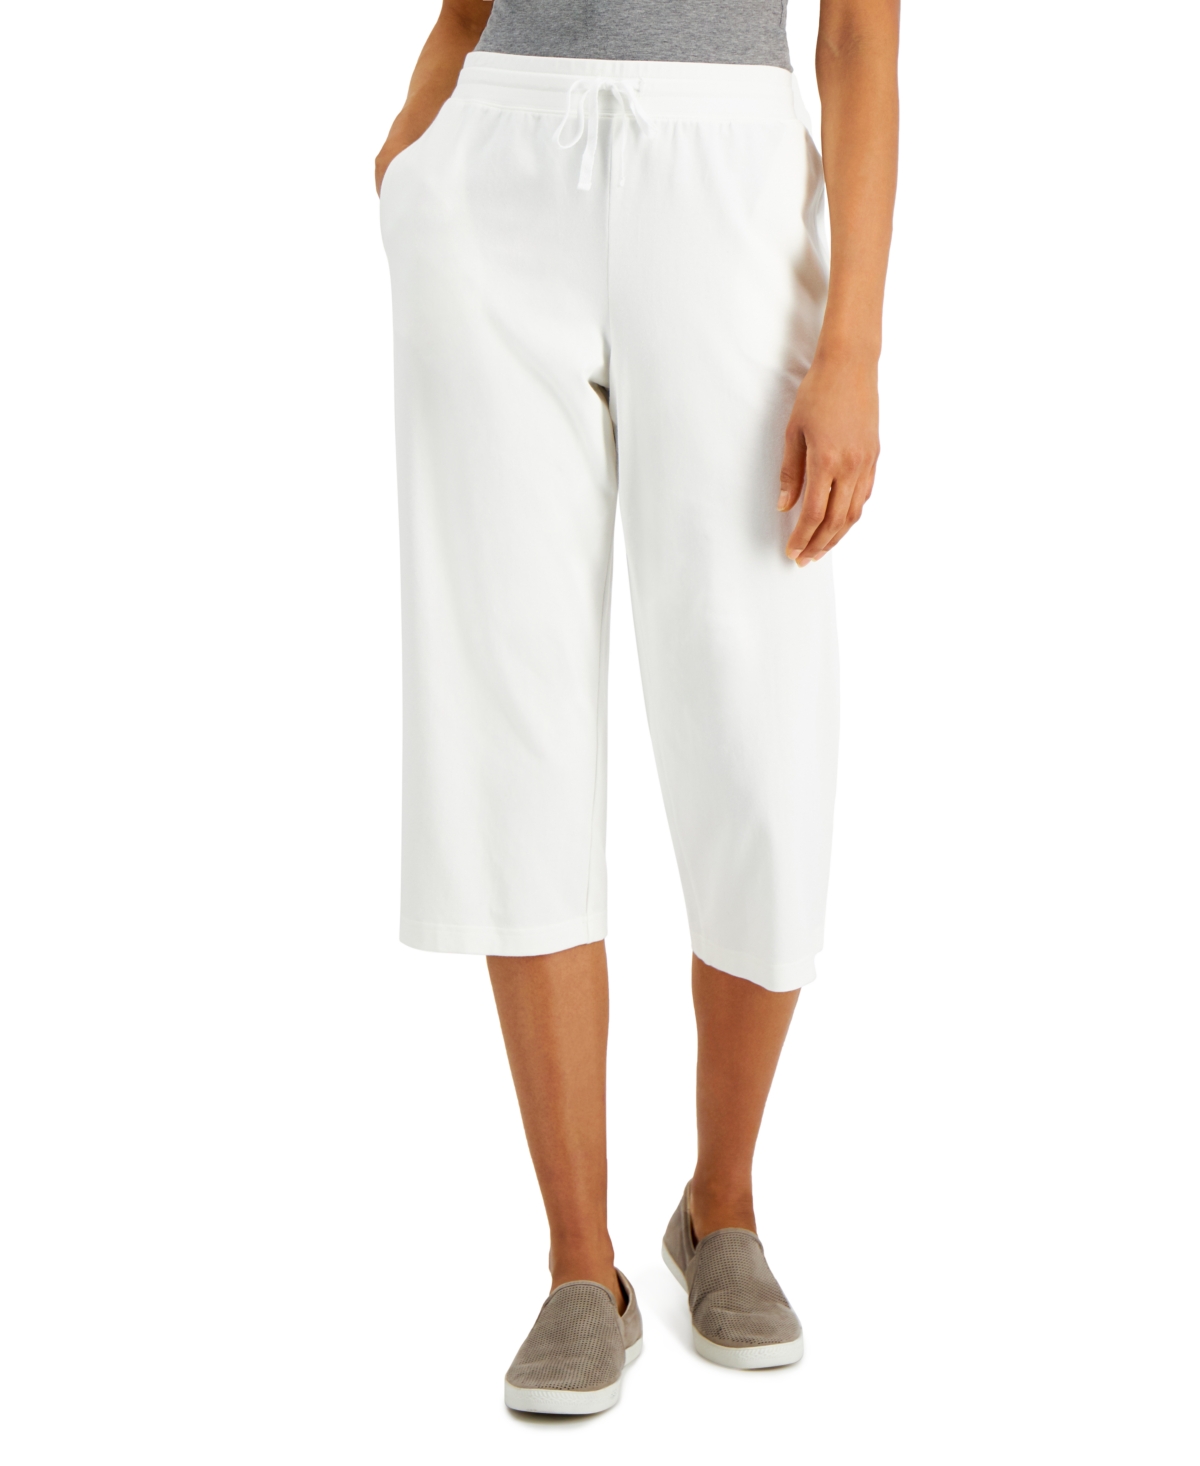 Petite Knit Drawstring Capri Pants, Created for Macy's - Bright White